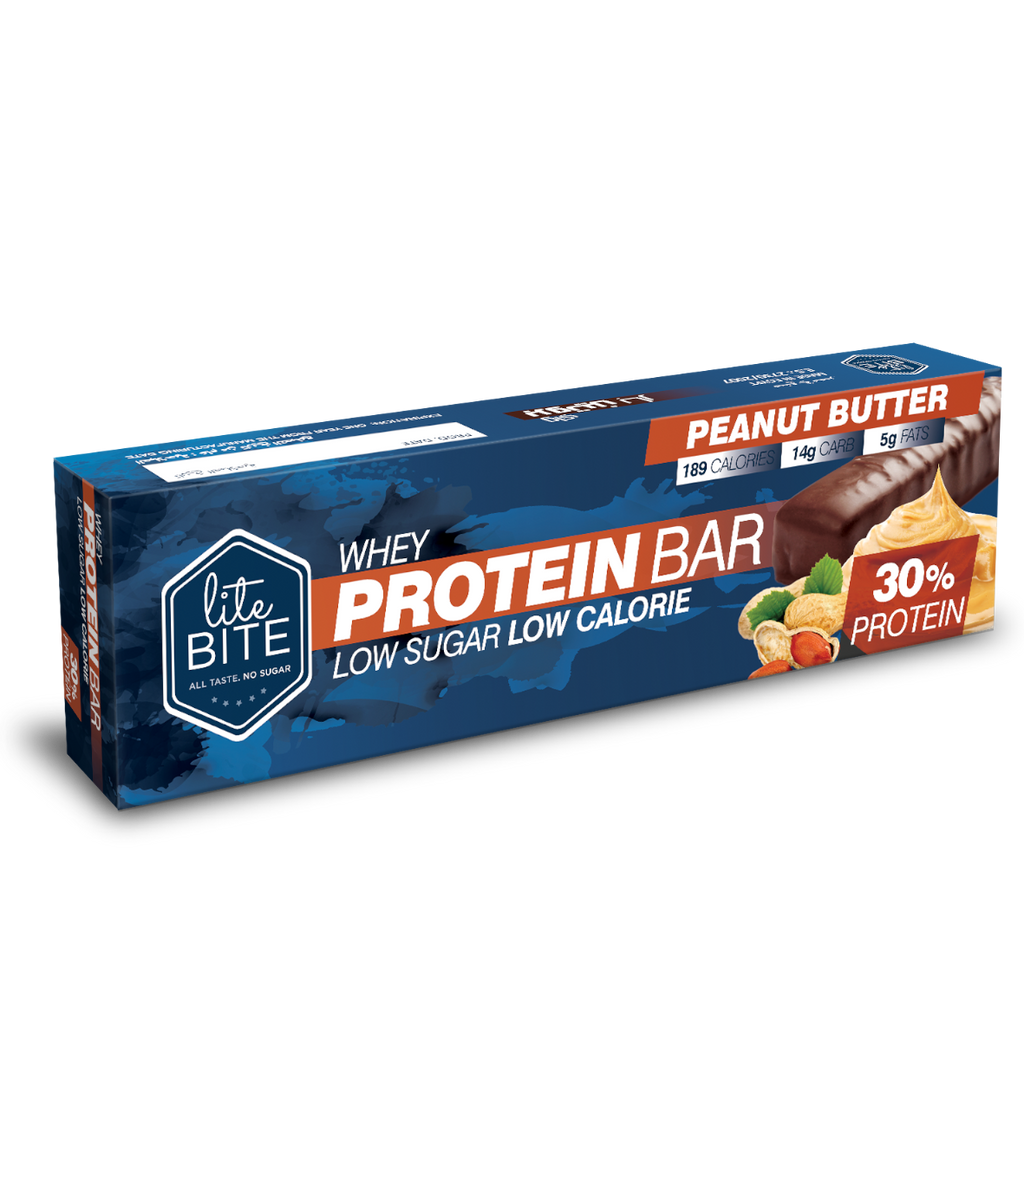 Peanut Butter Protein Bar - بروتين بار زبدة فول سوداني